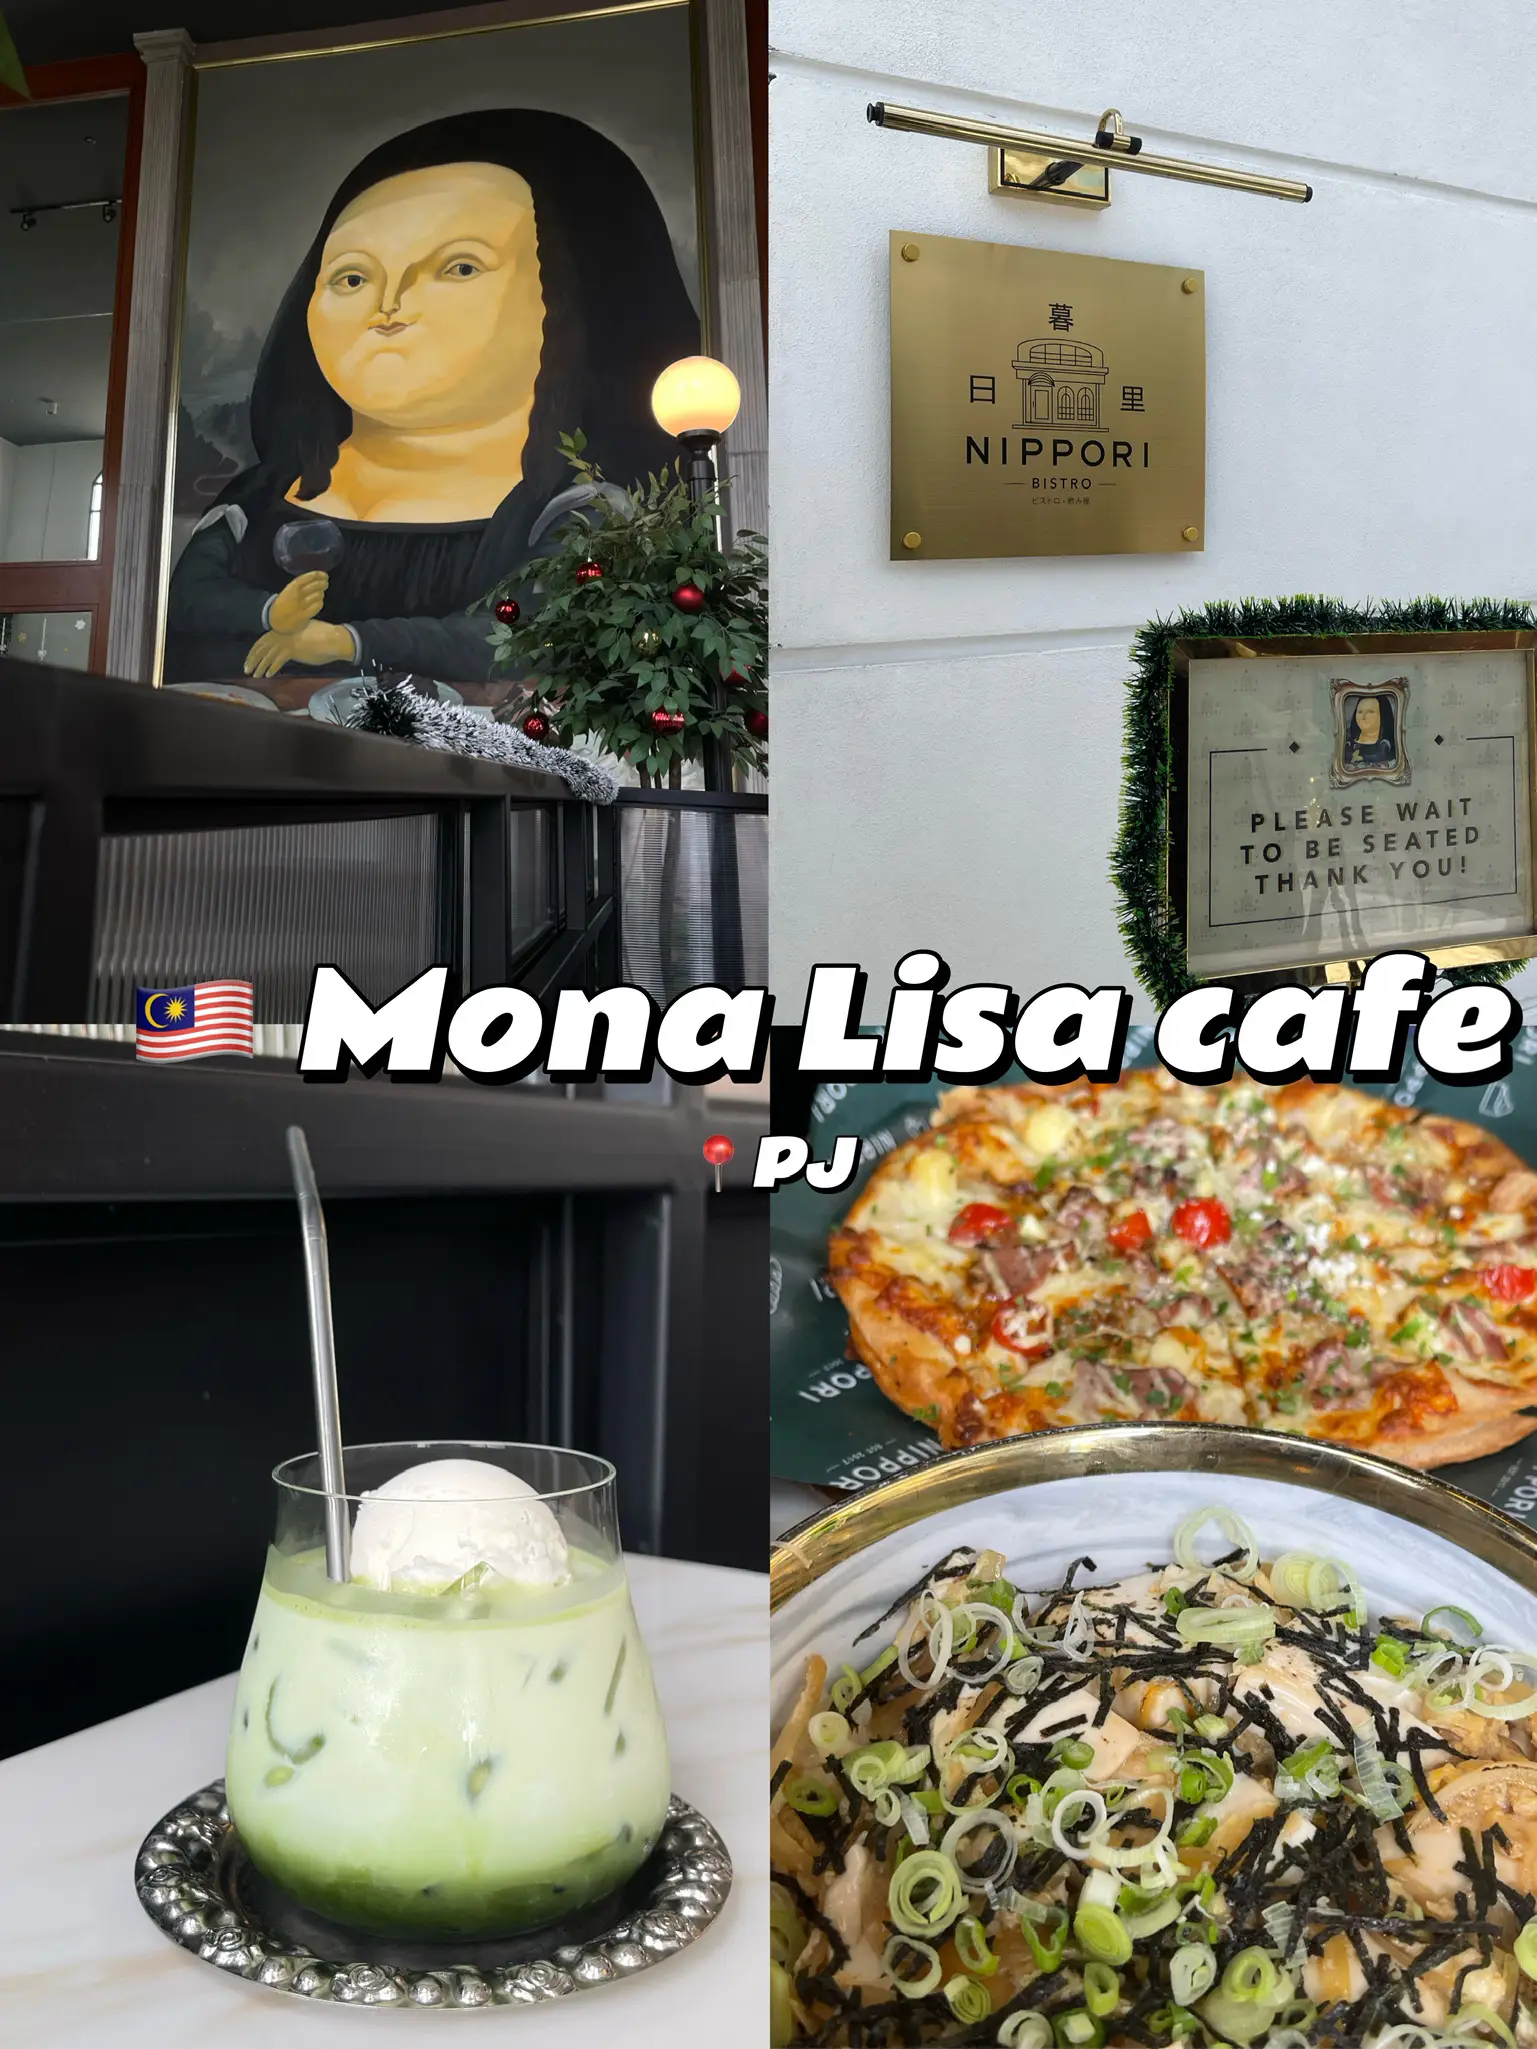 About - Monaliza Cuisine